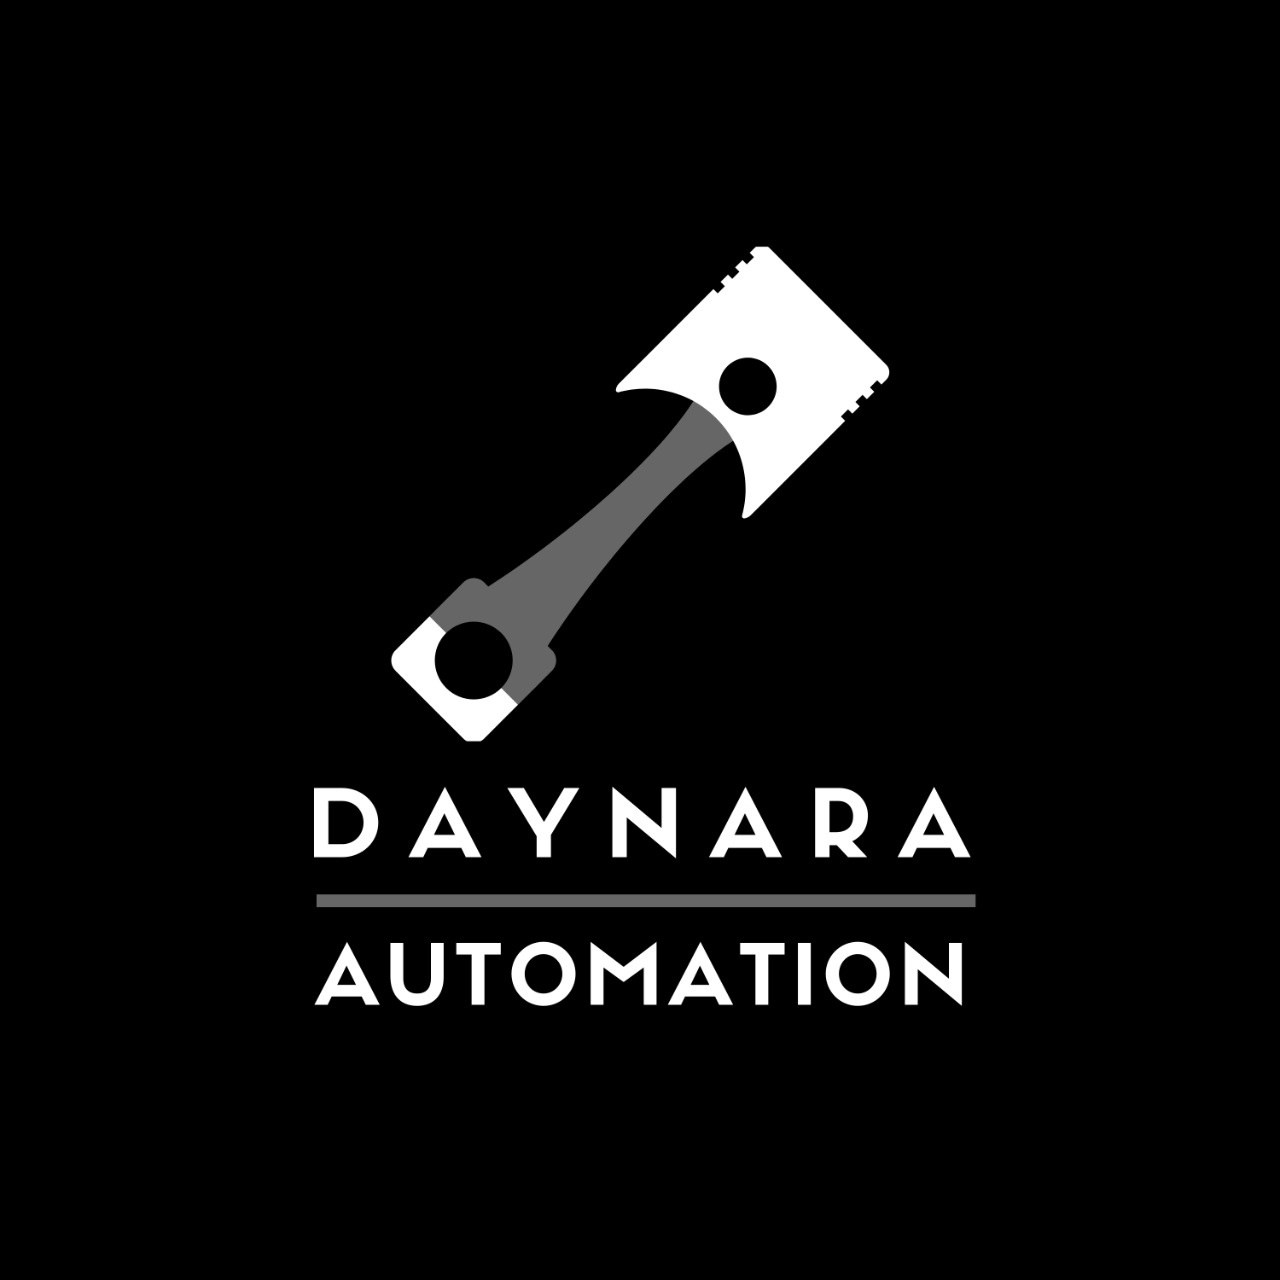 Daynara Automation